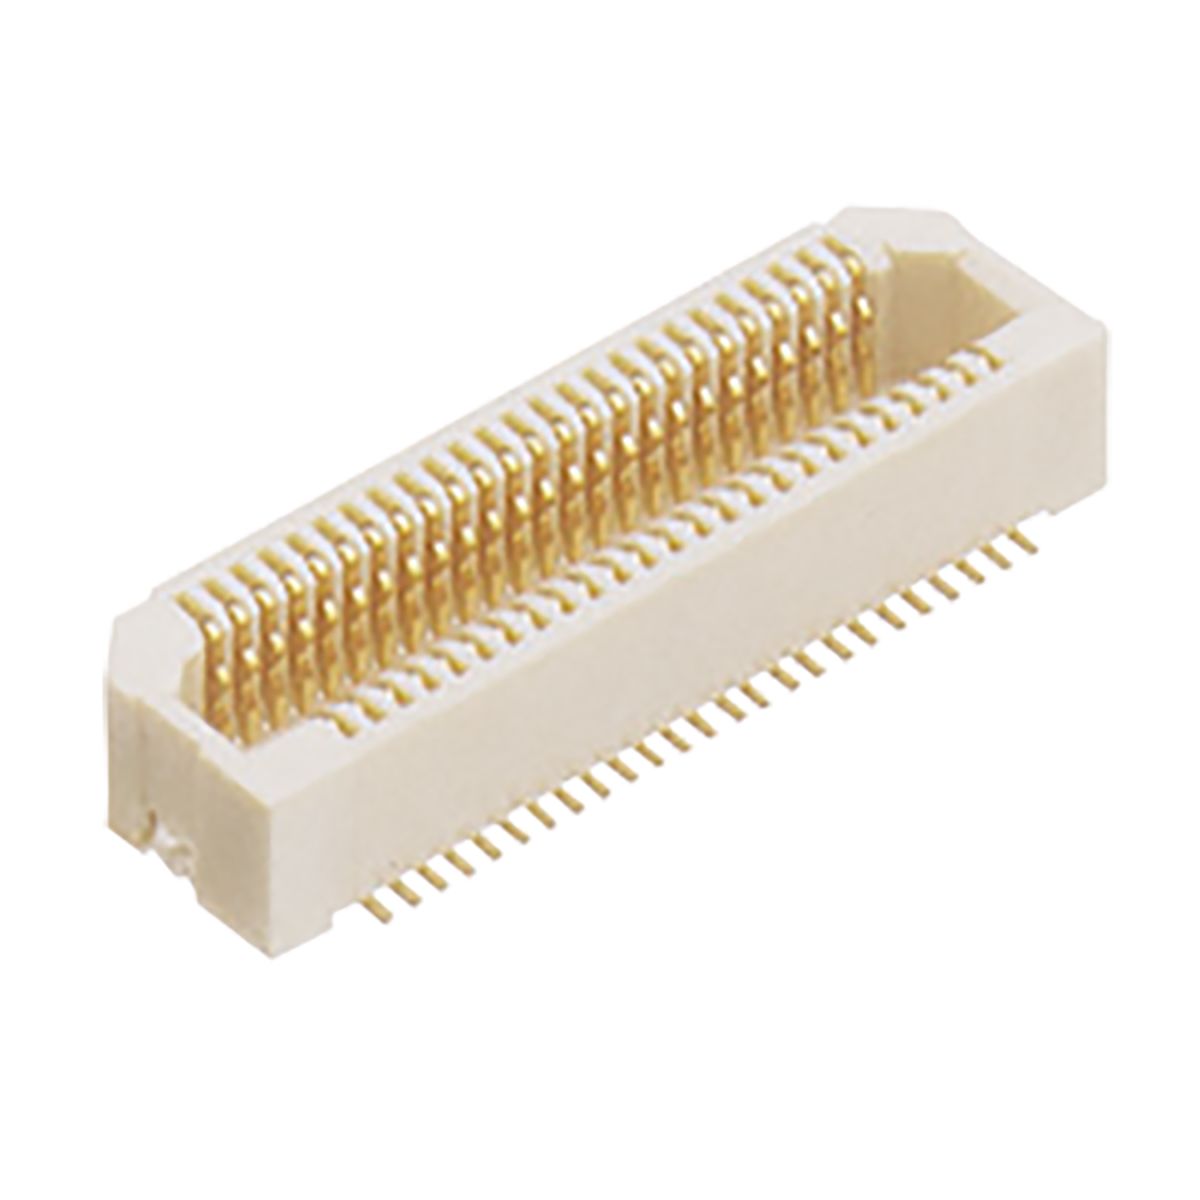 Conector hembra para PCB Panasonic serie P5KS, de 80 vías en 2 filas, paso 0.5mm, 60 V, 16A, Montaje Superficial, para